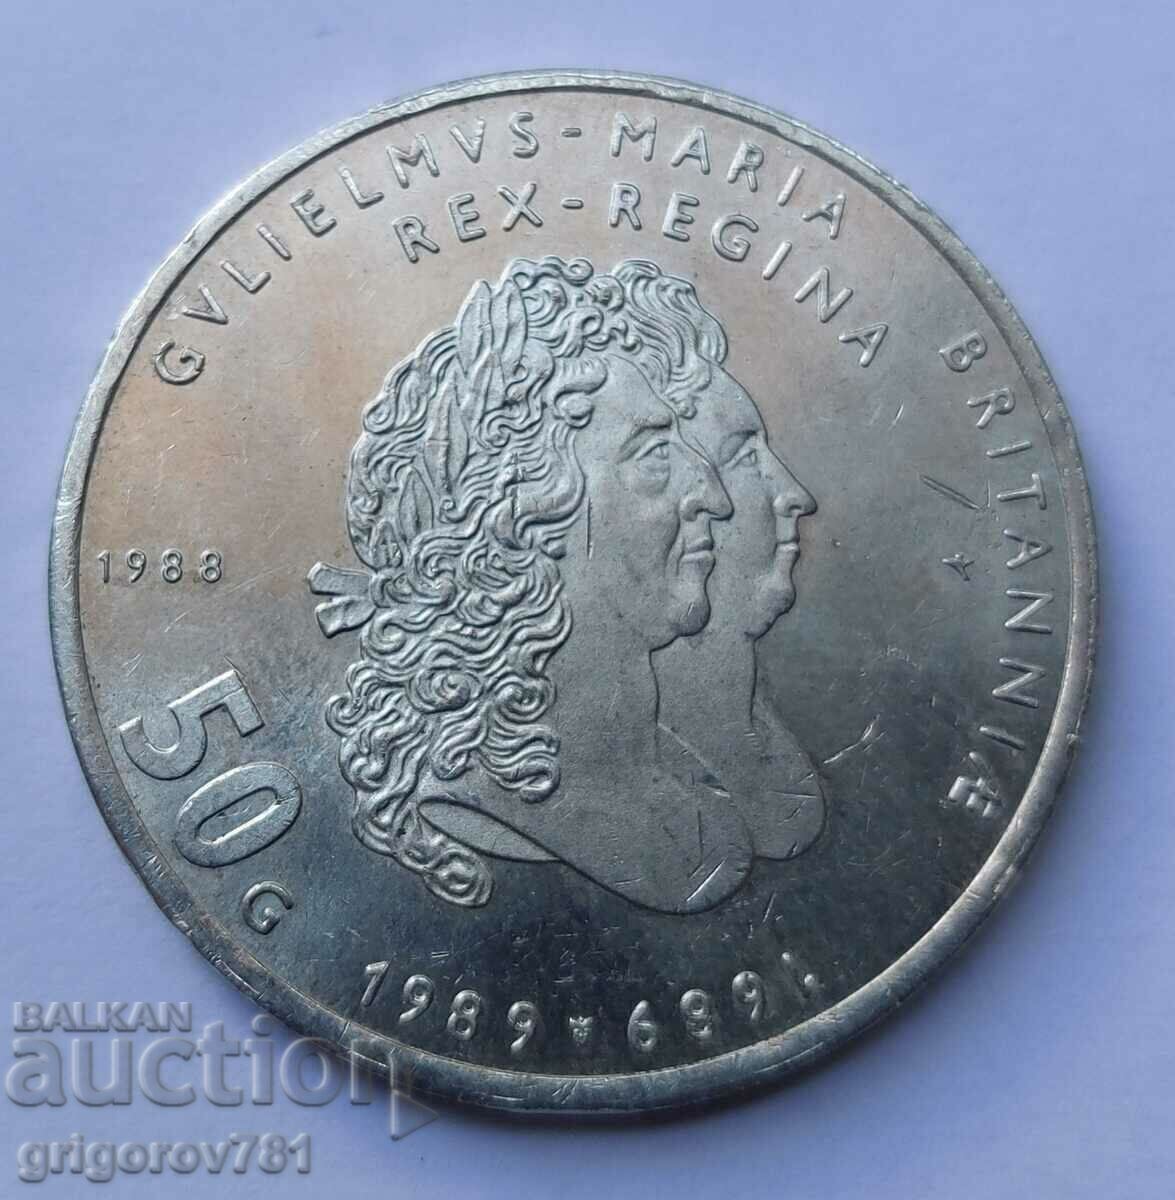 50 Guilder Silver Netherlands 1988 - Ασημένιο νόμισμα #3